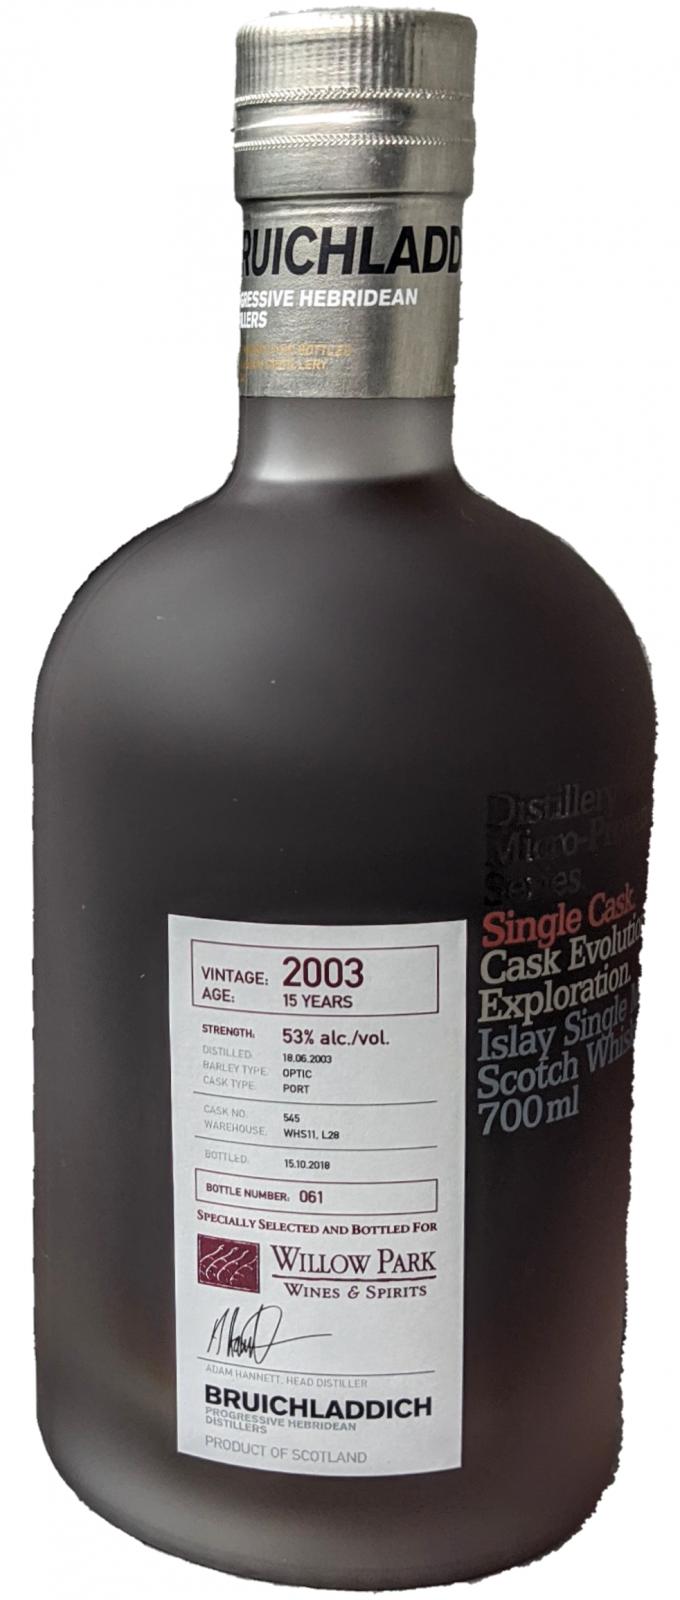 Bruichladdich 2003 Micro-Provenance Port #545 Willow Park Wines & Spirits 53% 700ml